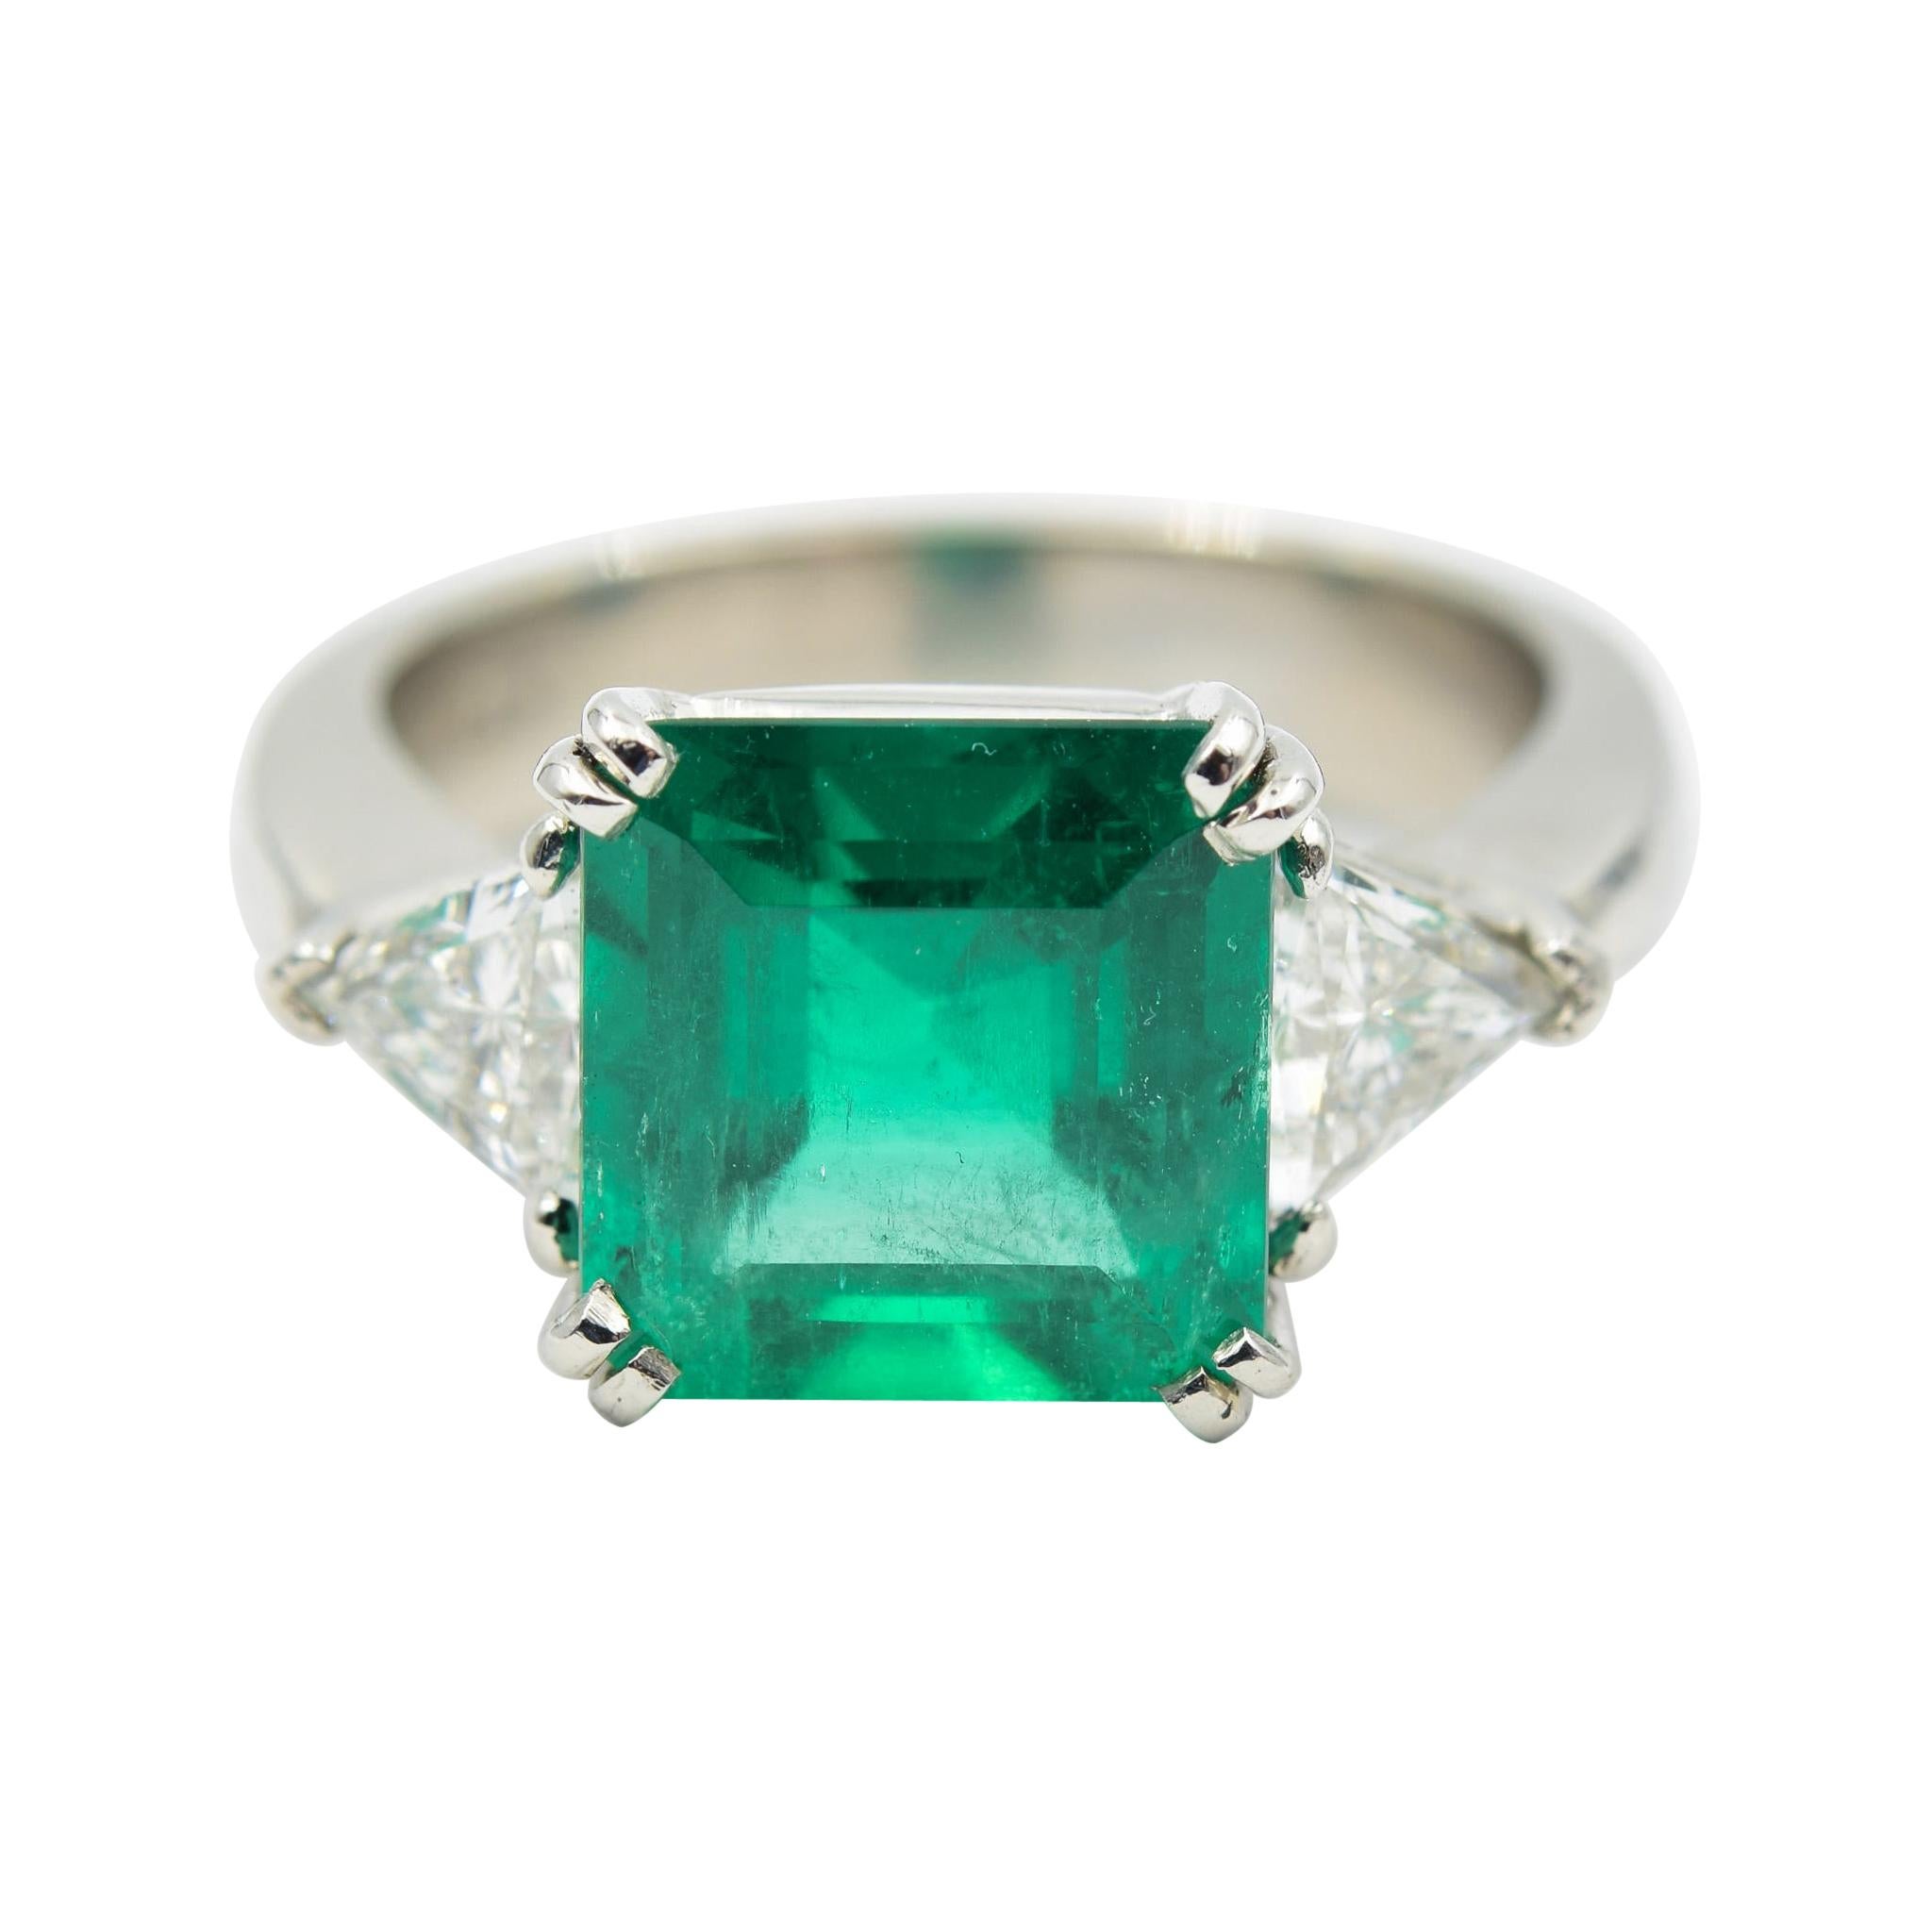 3.70 Carat Emerald & Diamond Ring in Platinum with Trillion Cut Sides